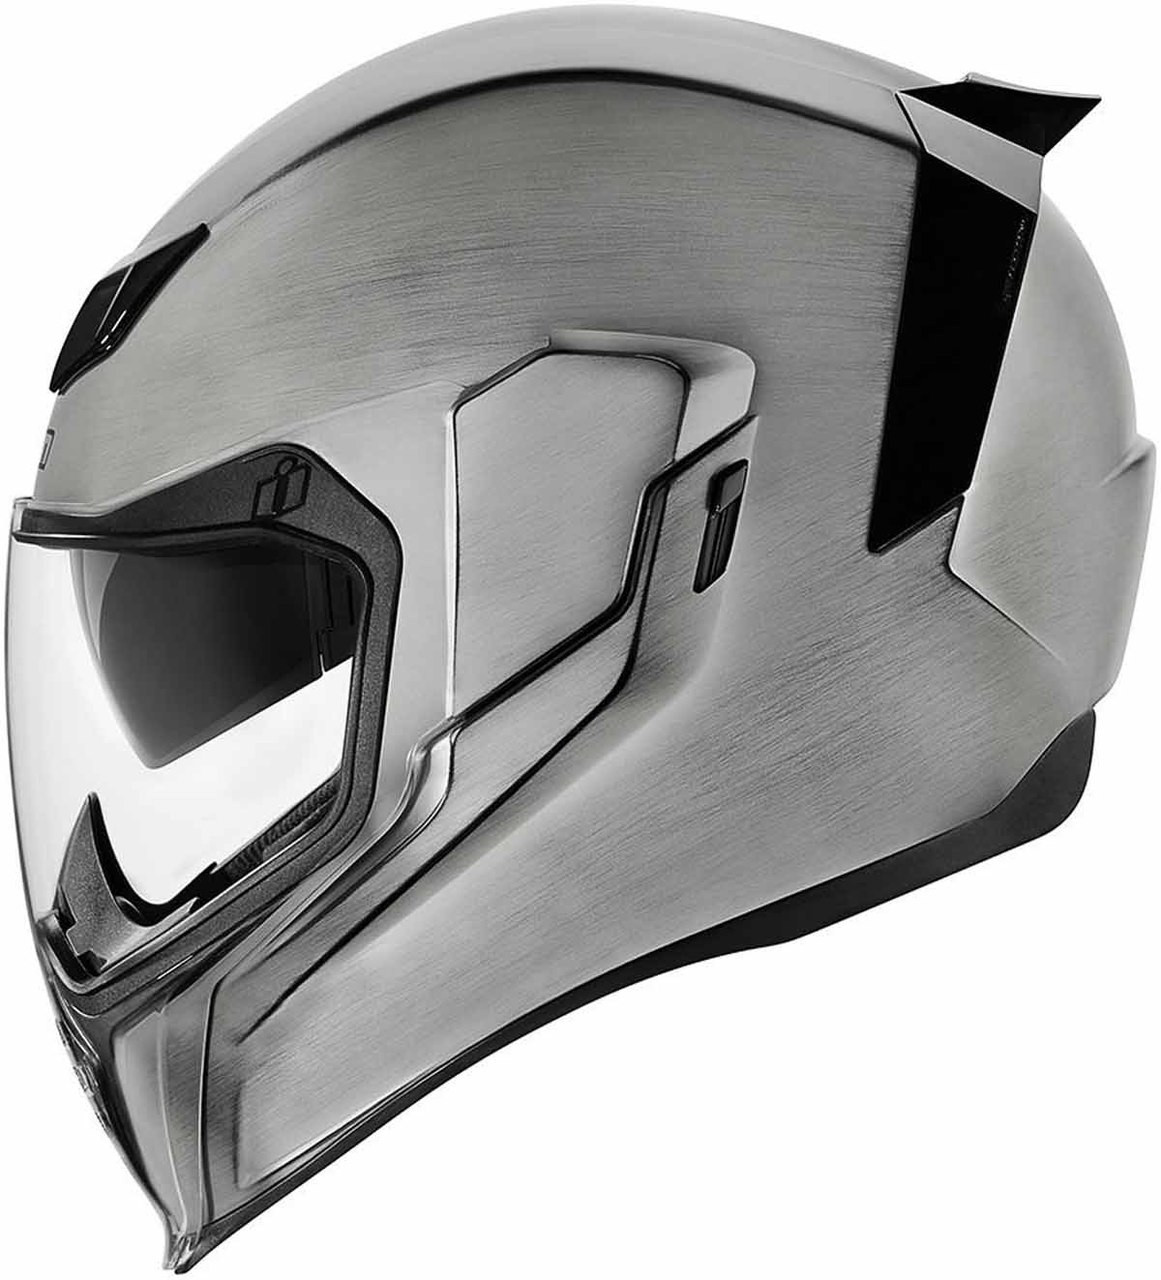 ICON Airflite Quicksilver Helmet